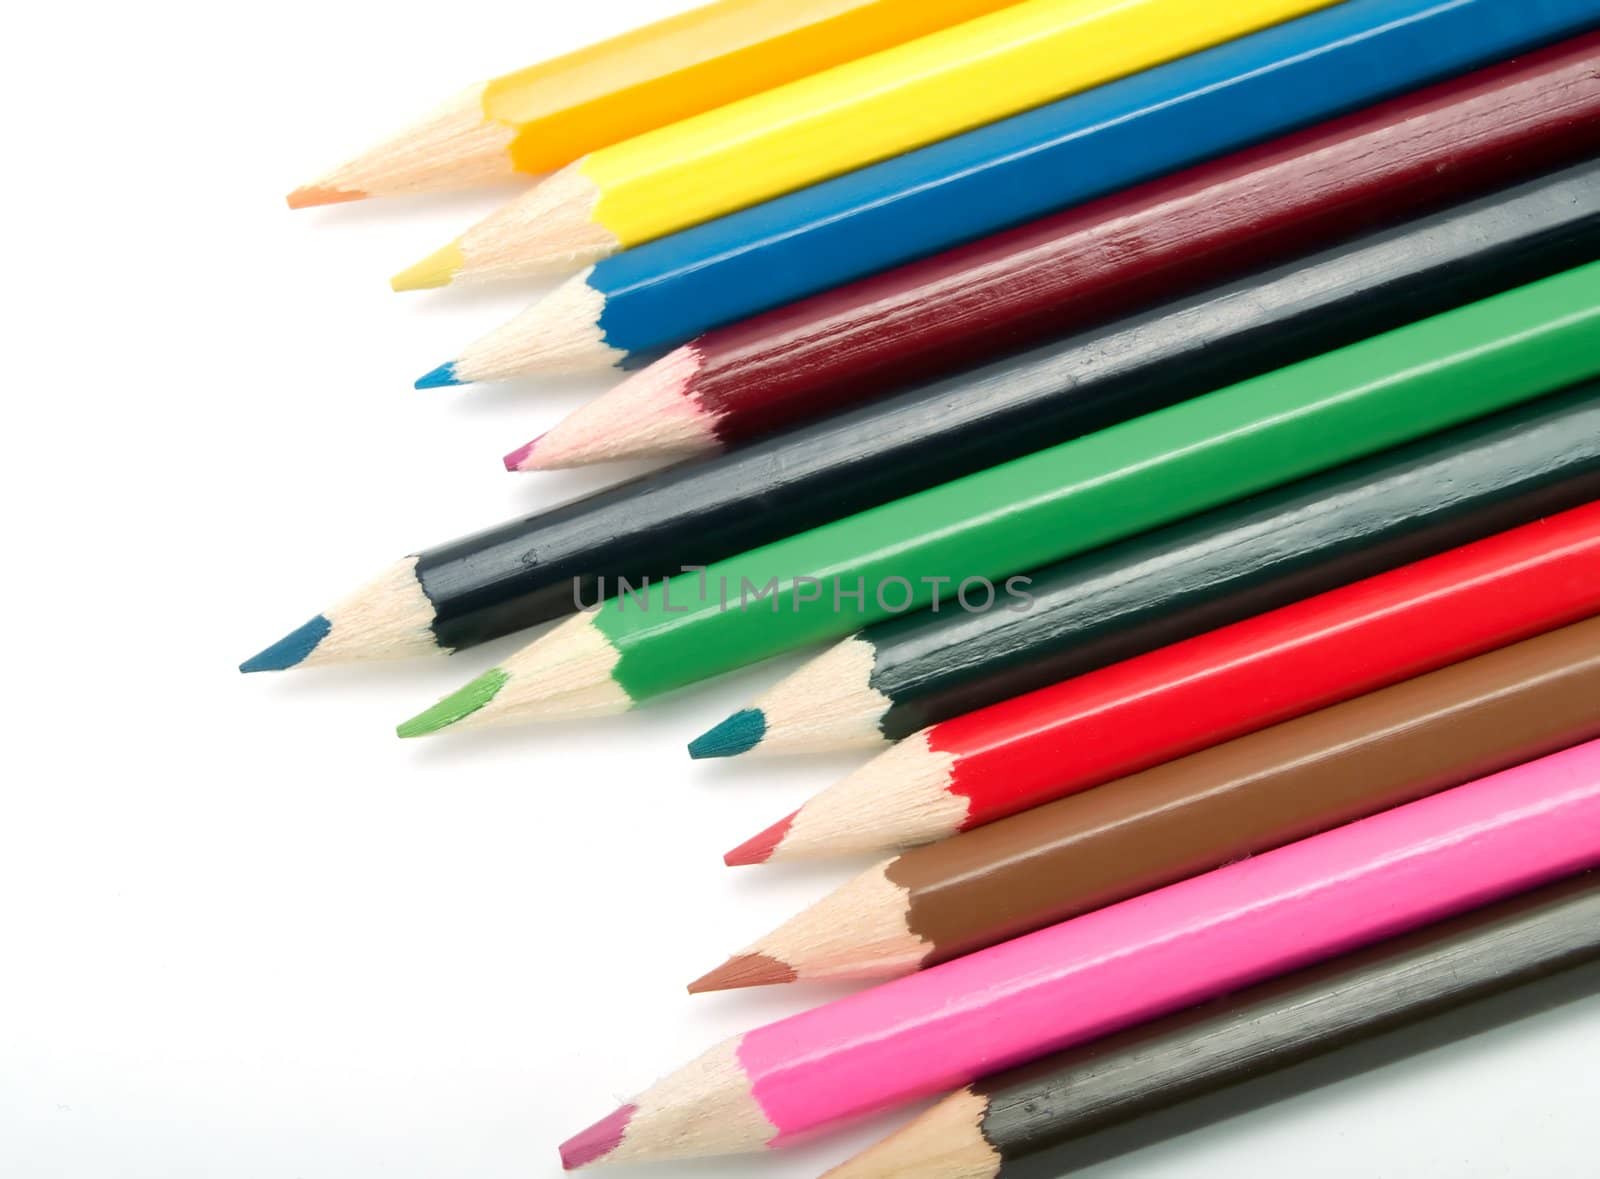 Color pencils by henrischmit